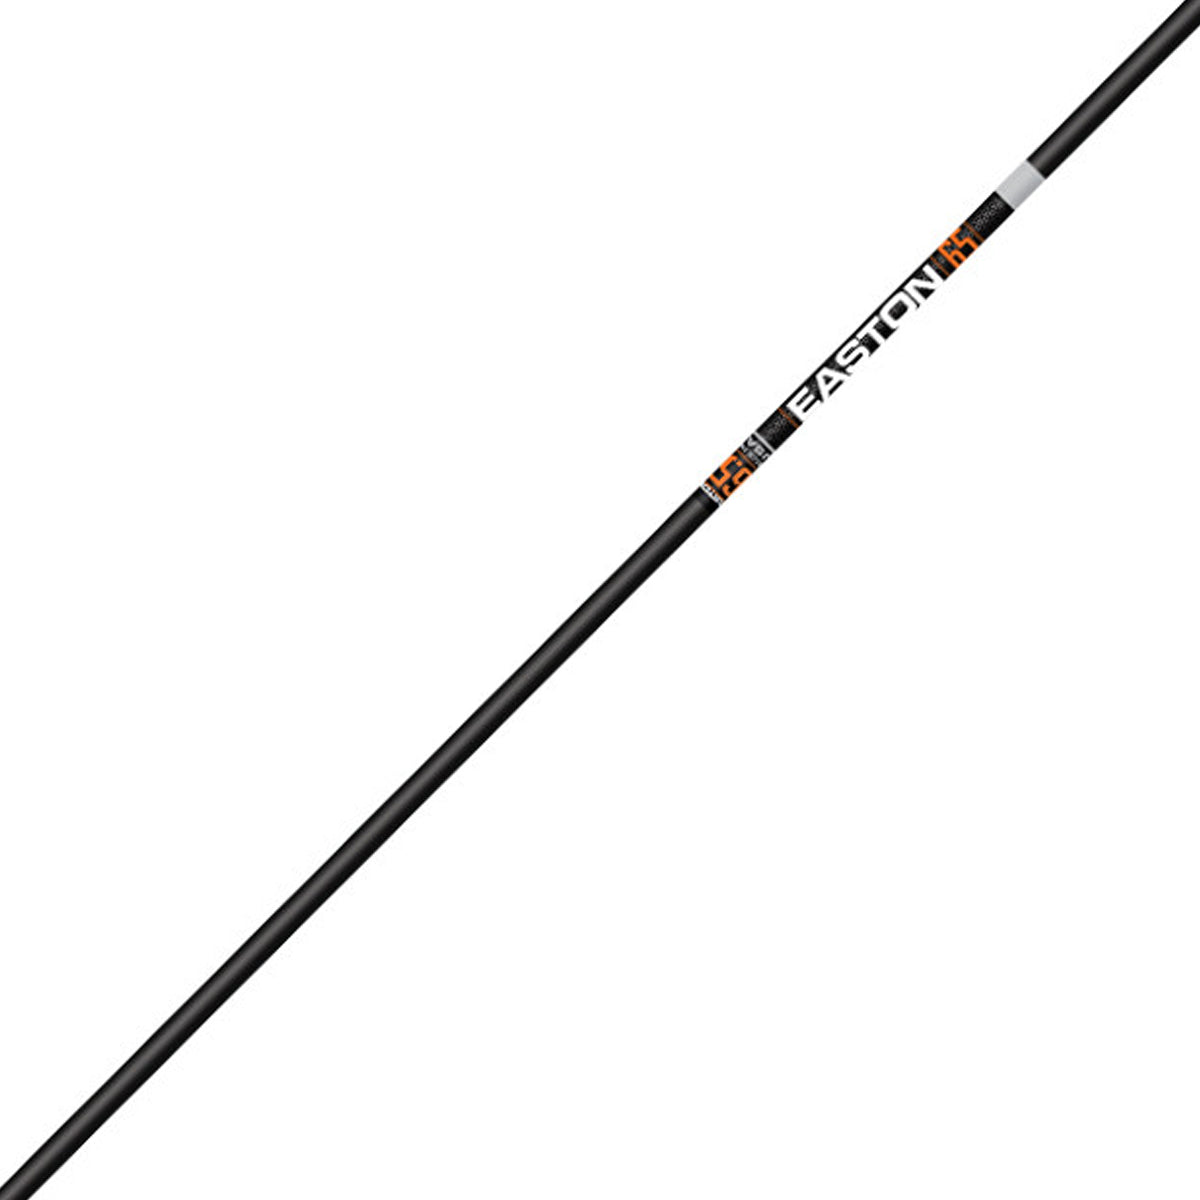 Easton 6.5mm Hunter Classic Arrow Shafts - 12 Count by Easton | Archery - goHUNT Shop